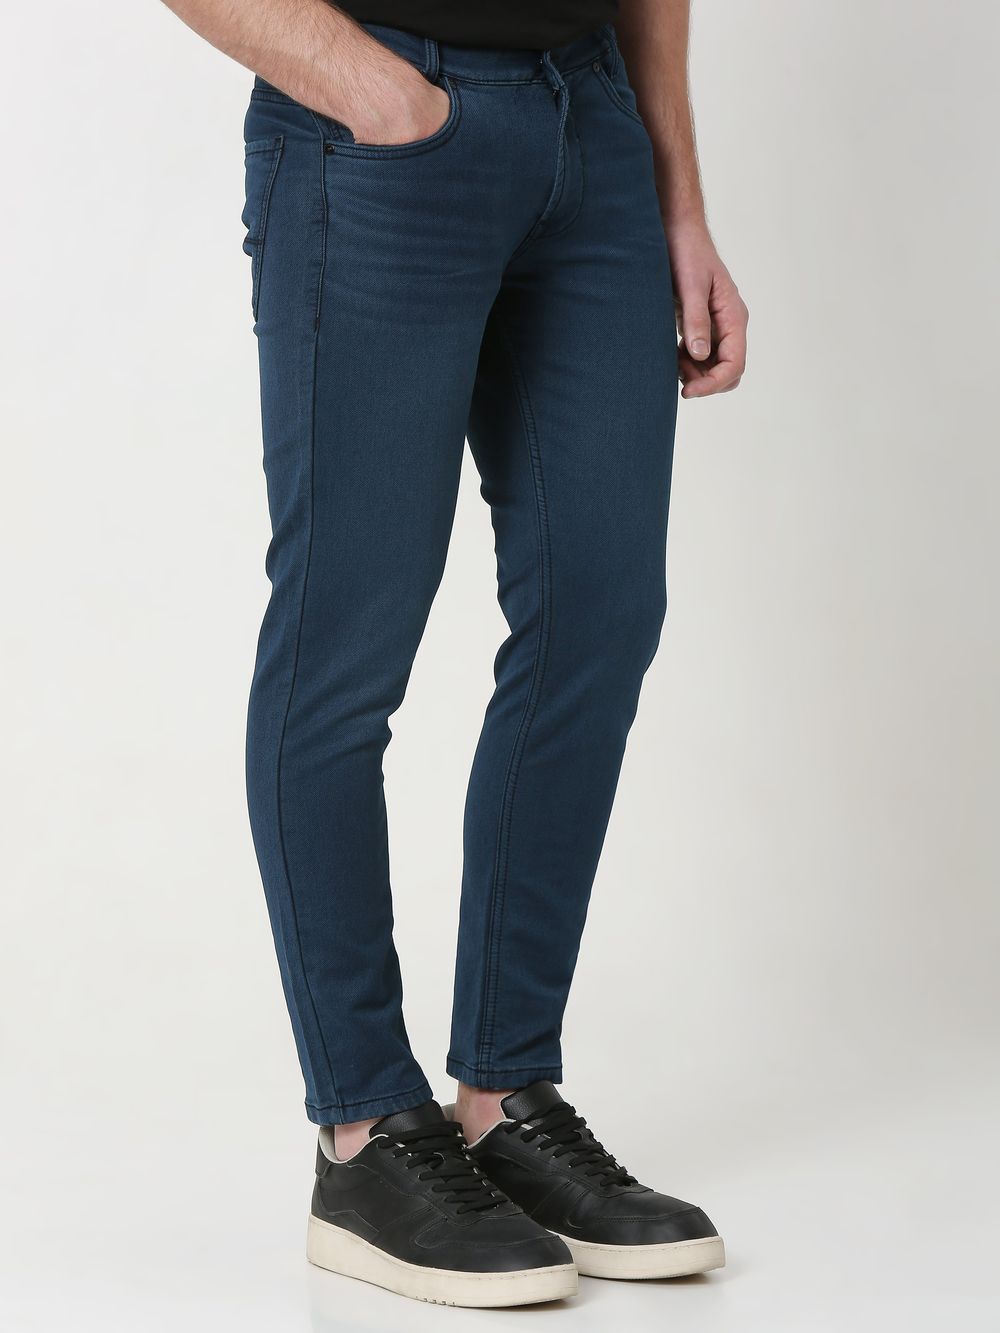 Deep Indigo Blue Ankle Length Denim Deluxe Stretch Jeans